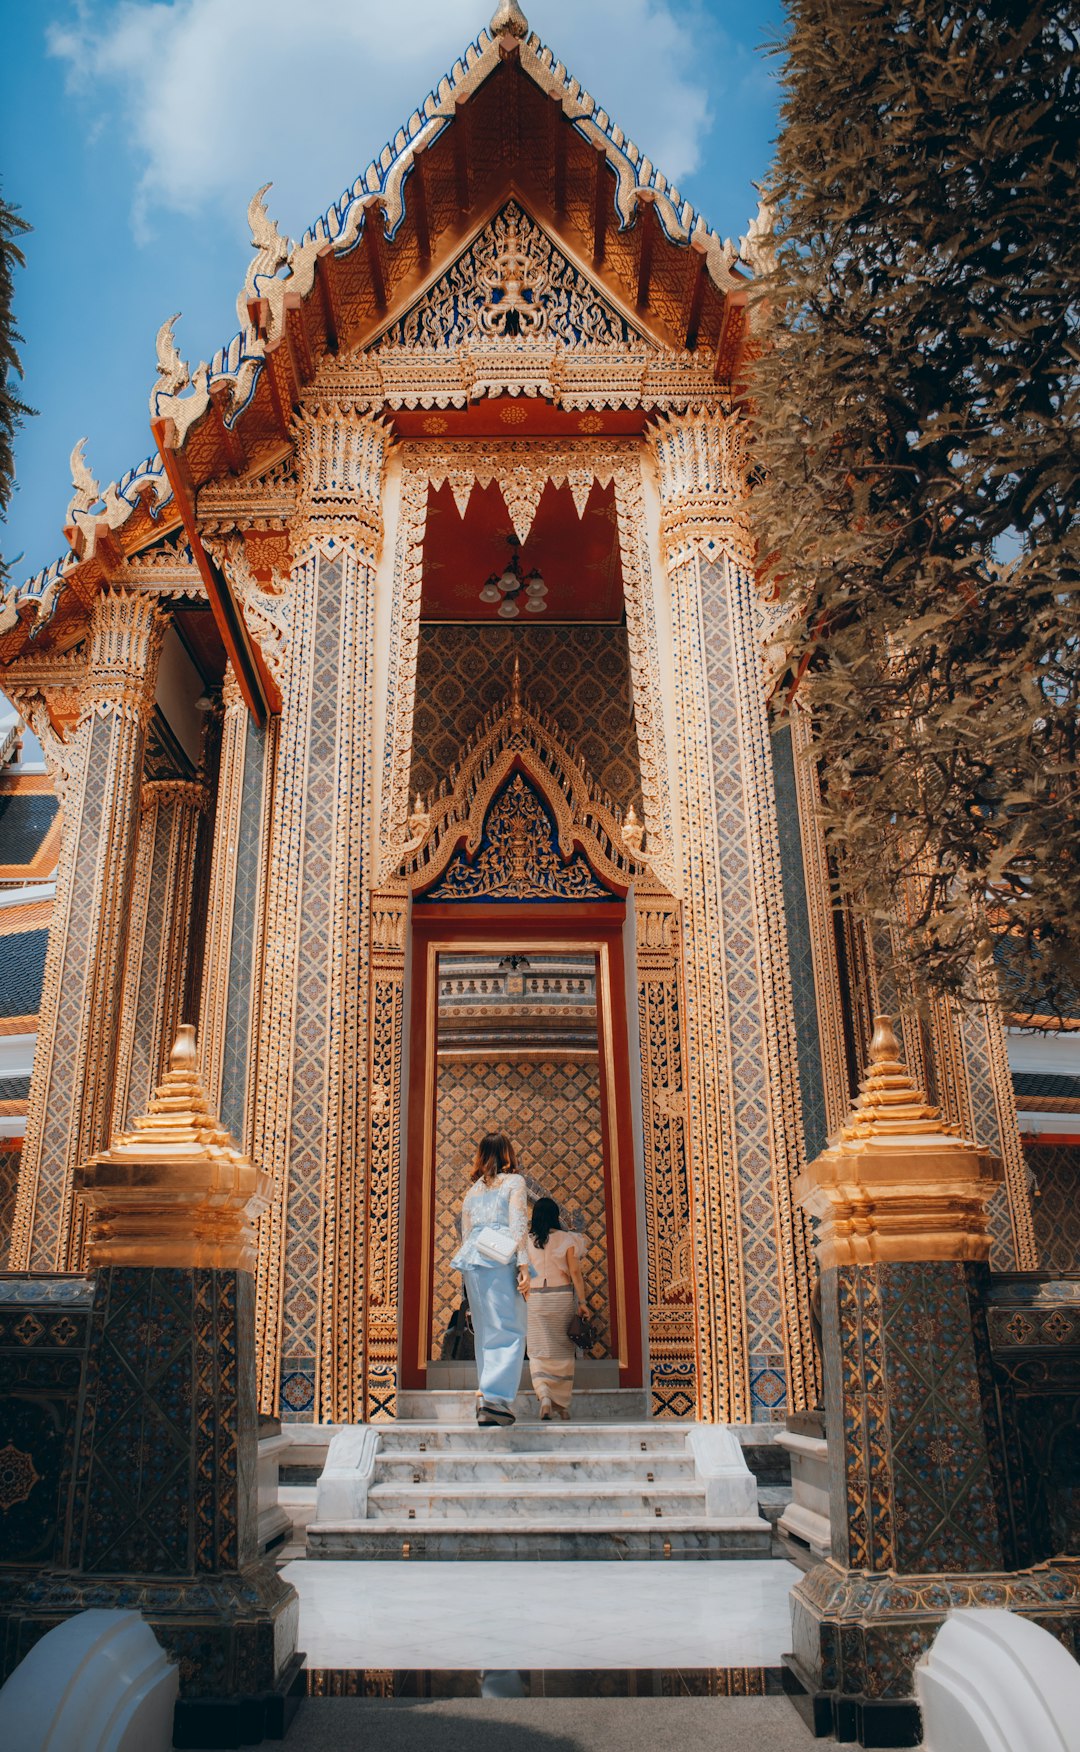 Place of worship photo spot Bangkok Wat Phra Chetuphon Vimolmangklararm Rajwaramahaviharn